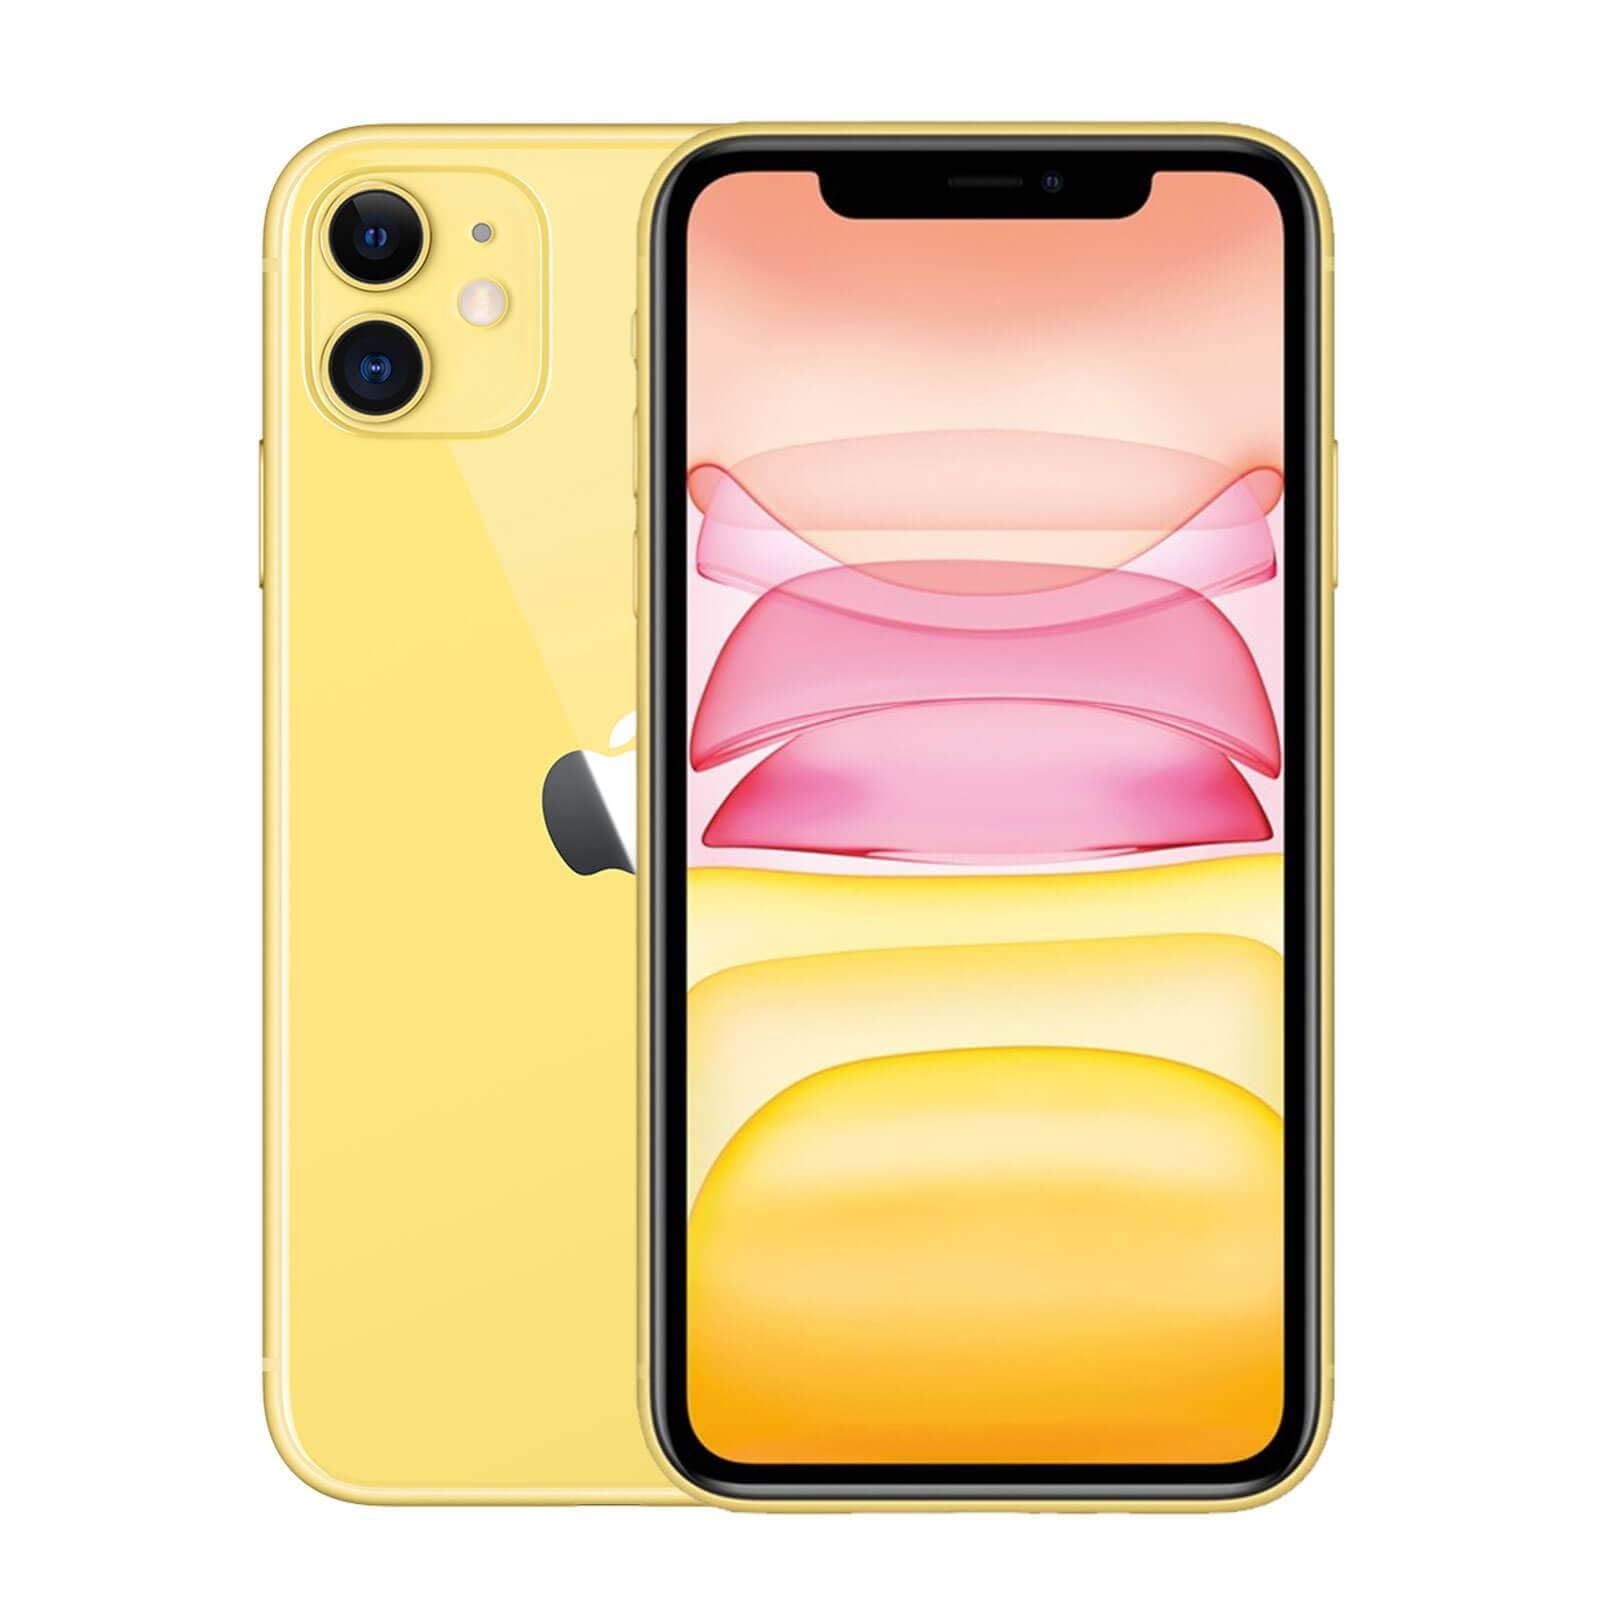 Apple iPhone 11 128GB Yellow Good - Unlocked 128GB Yellow Good